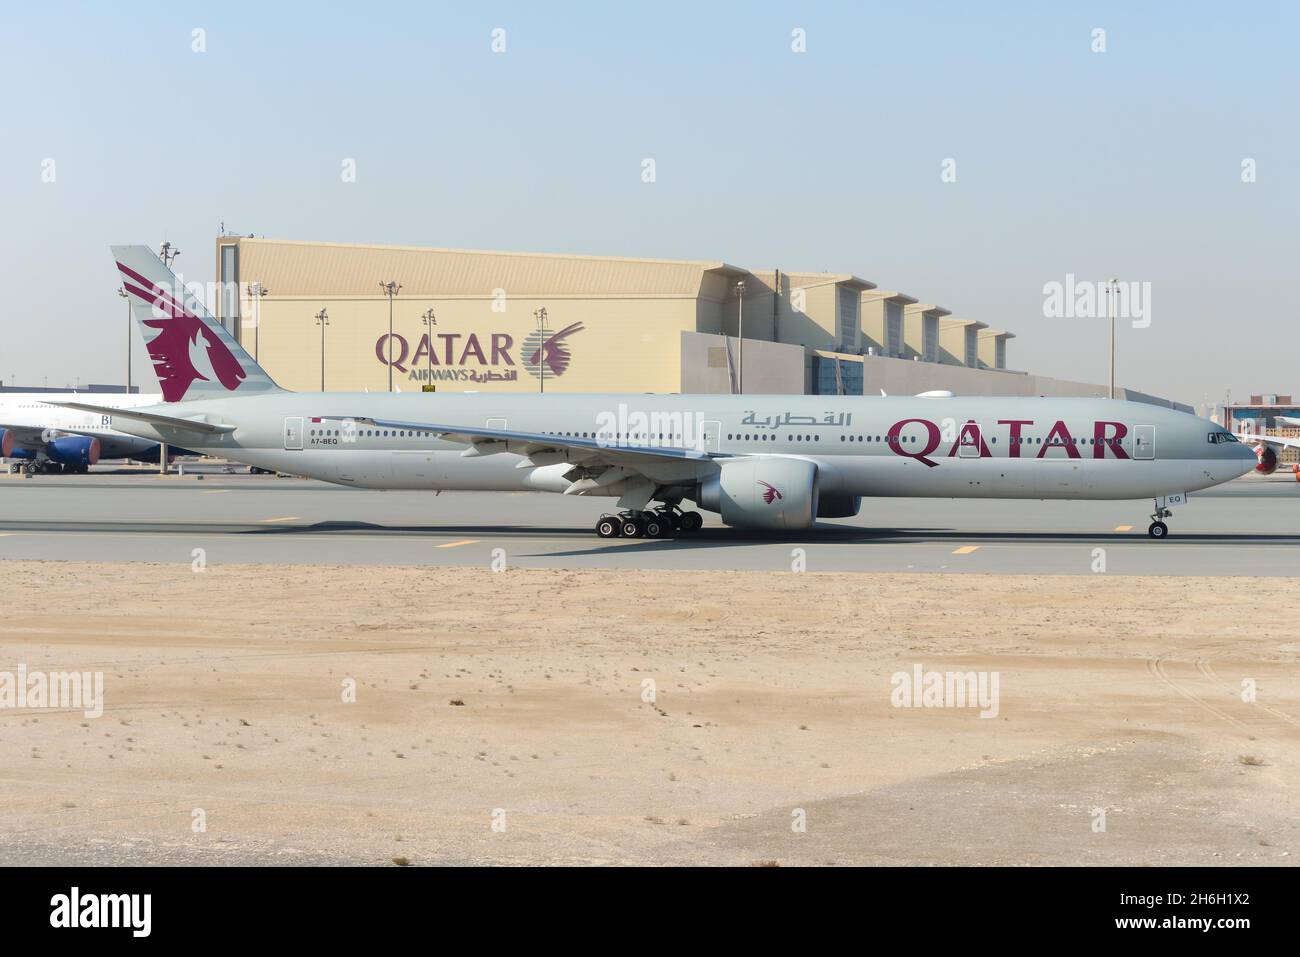 Qatar Airways Boeing 777 aereo all'aeroporto di Doha in Qatar. Volo 777-300ER tassare all'Aeroporto di Doha Hamad. Foto Stock